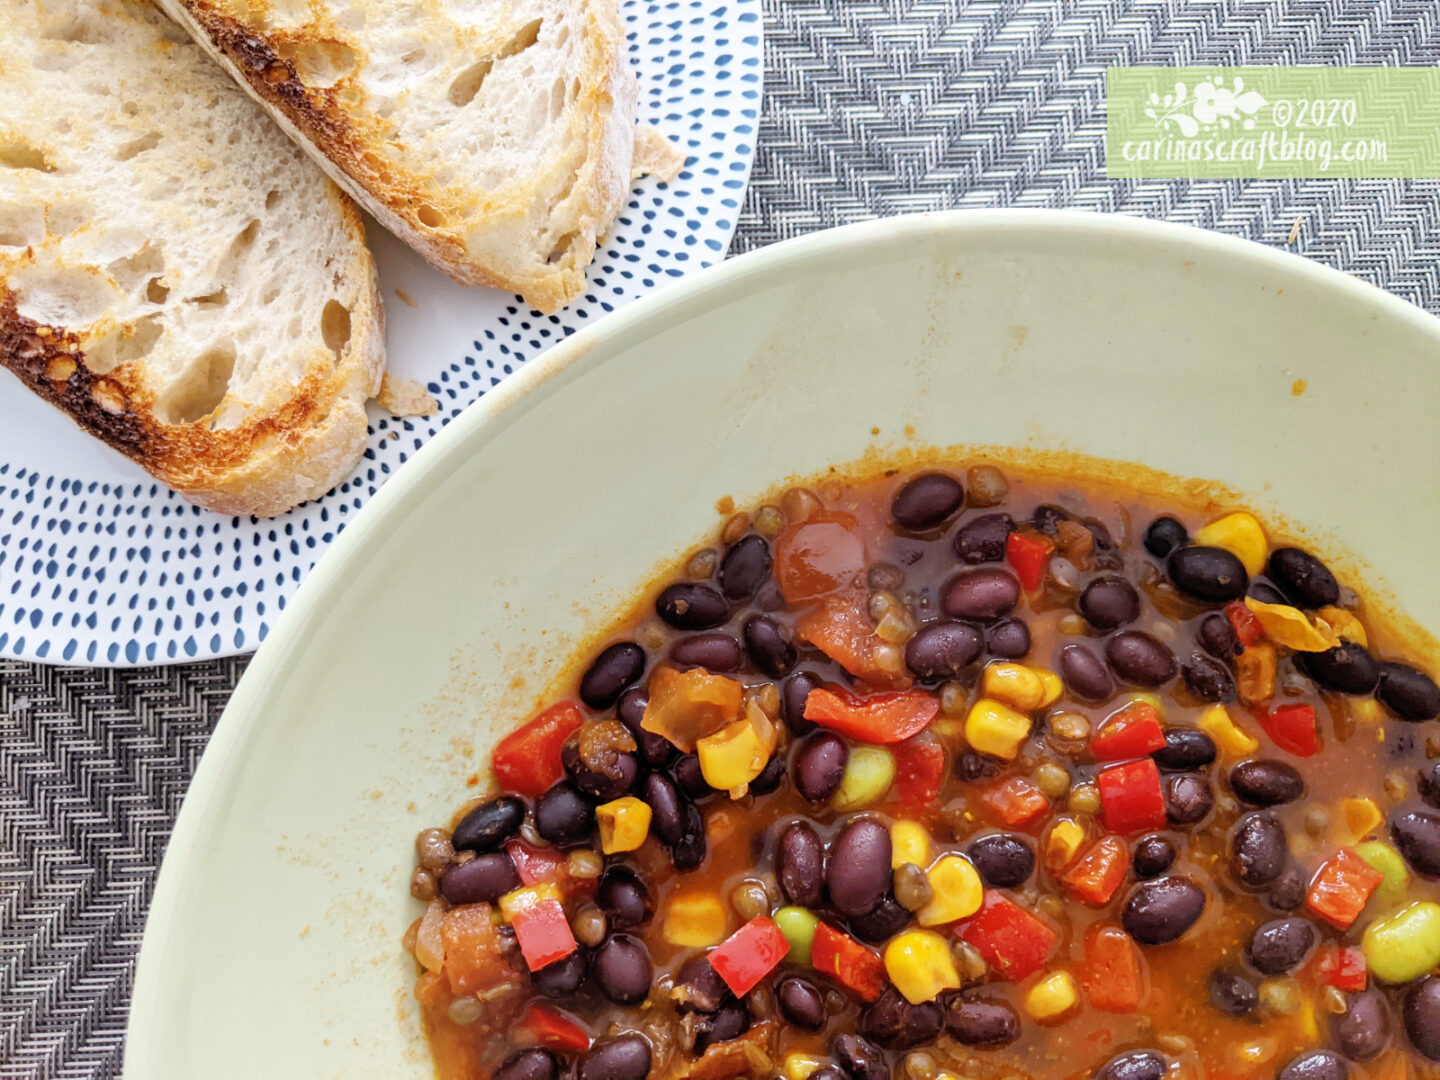 Recipe Chili Bean Soup Carina S Craftblog